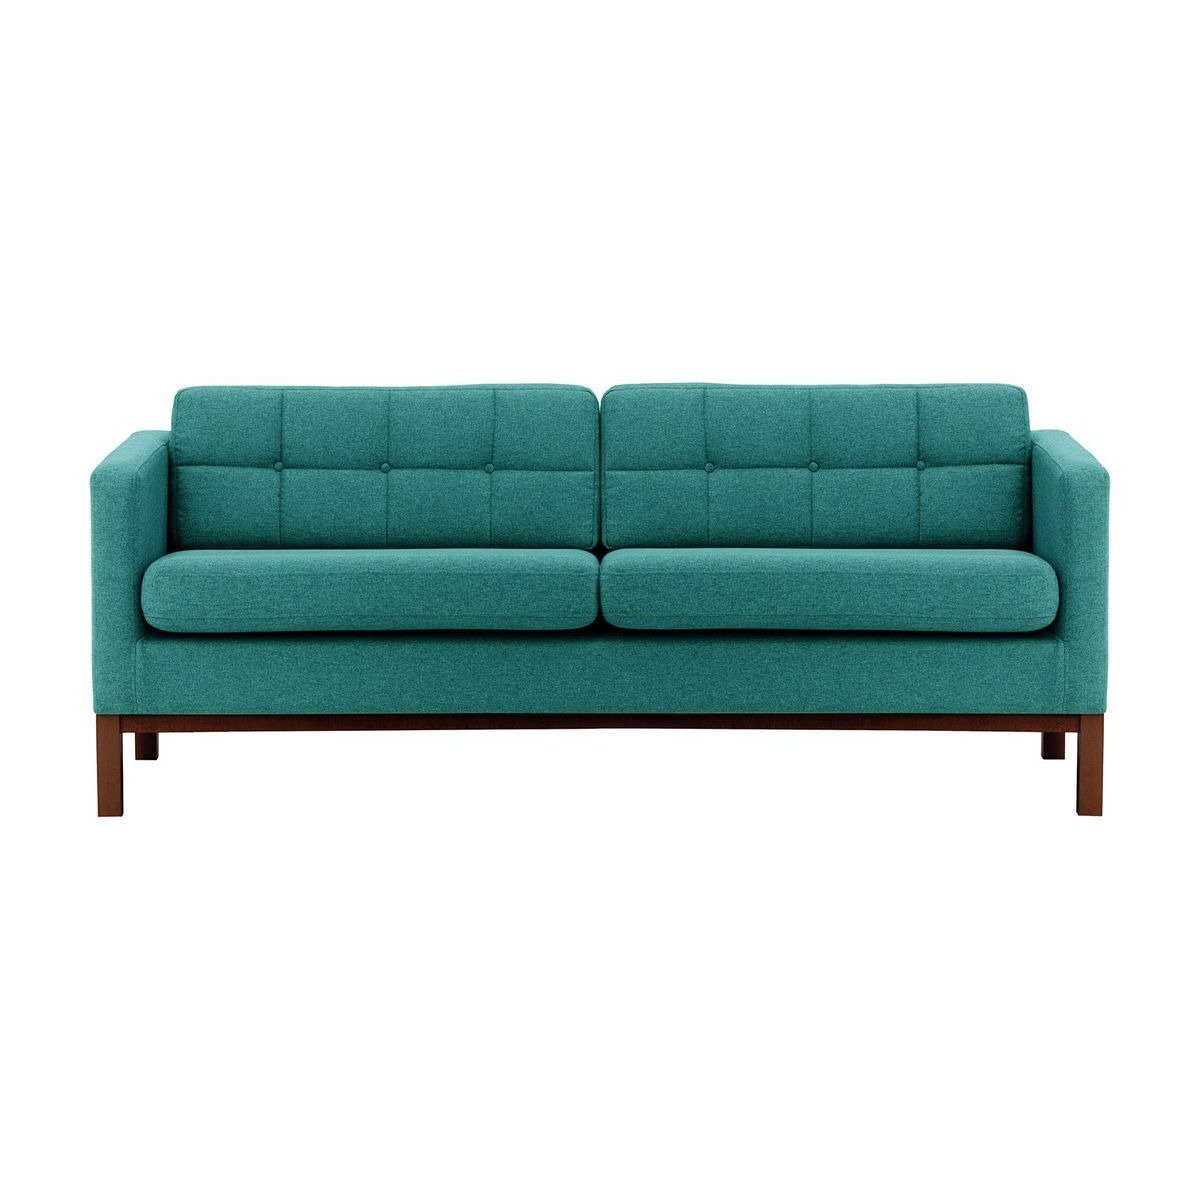 Normann 3 Seater Sofa, turquoise, Leg colour: dark oak - image 1